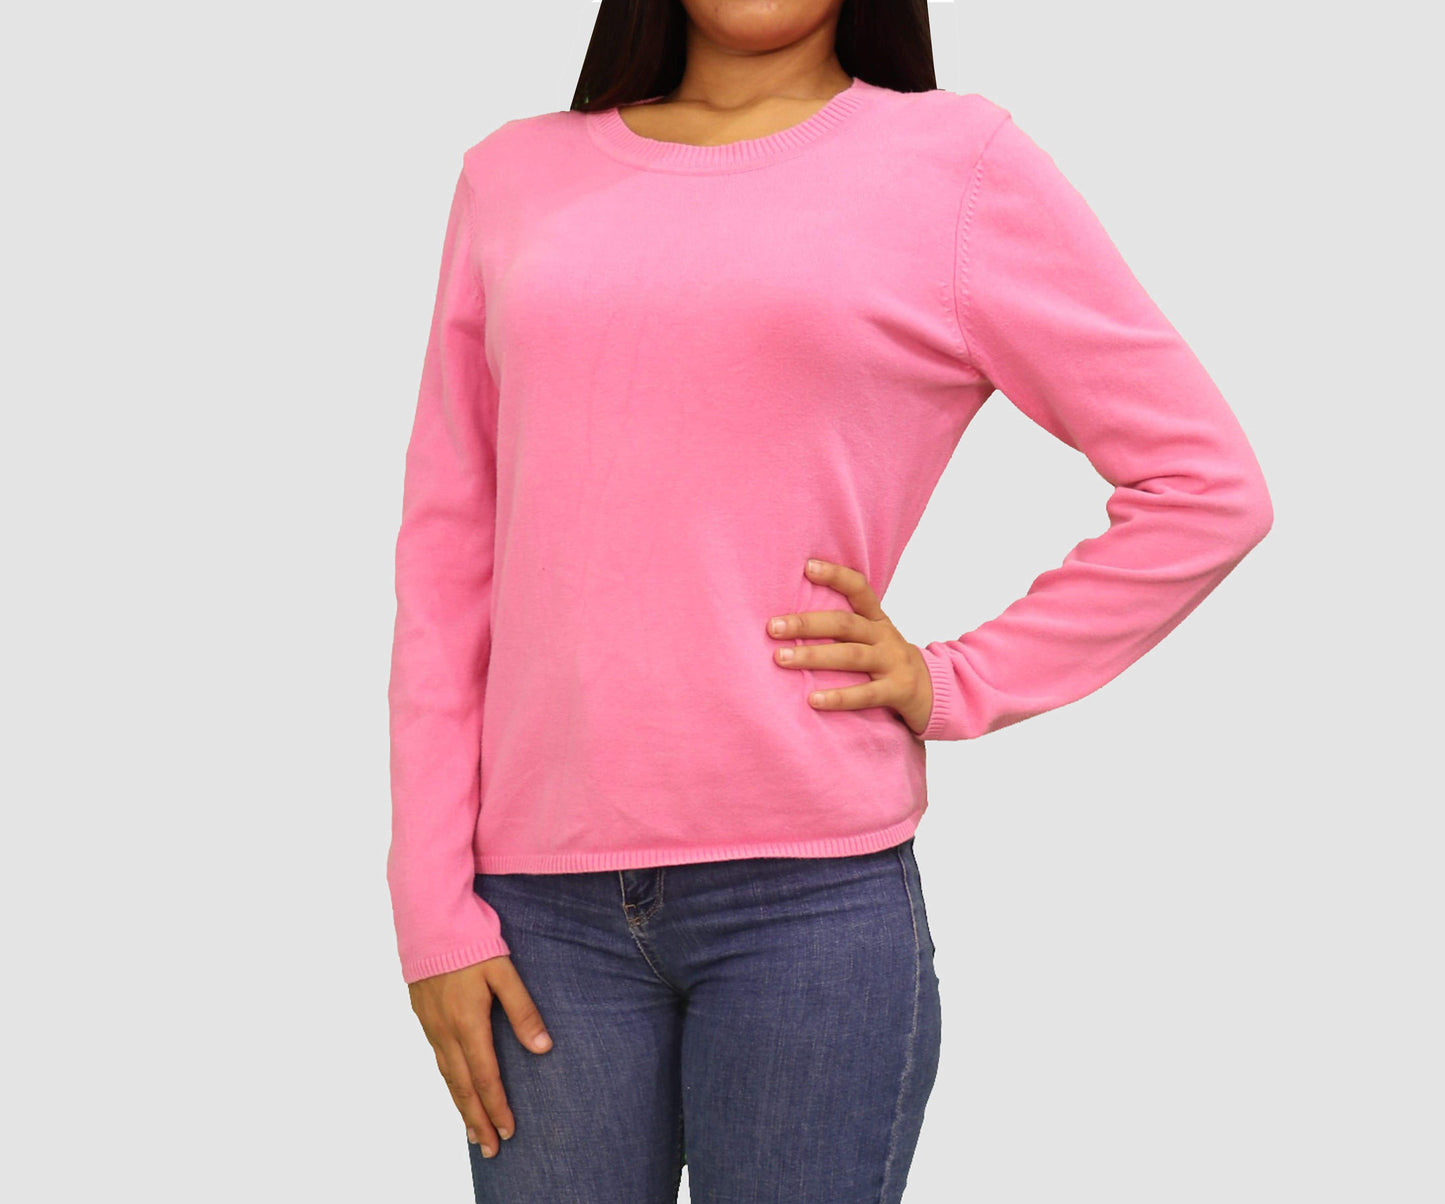 TALBOTS Womens Tops Medium / Pink Long Sleeve Top